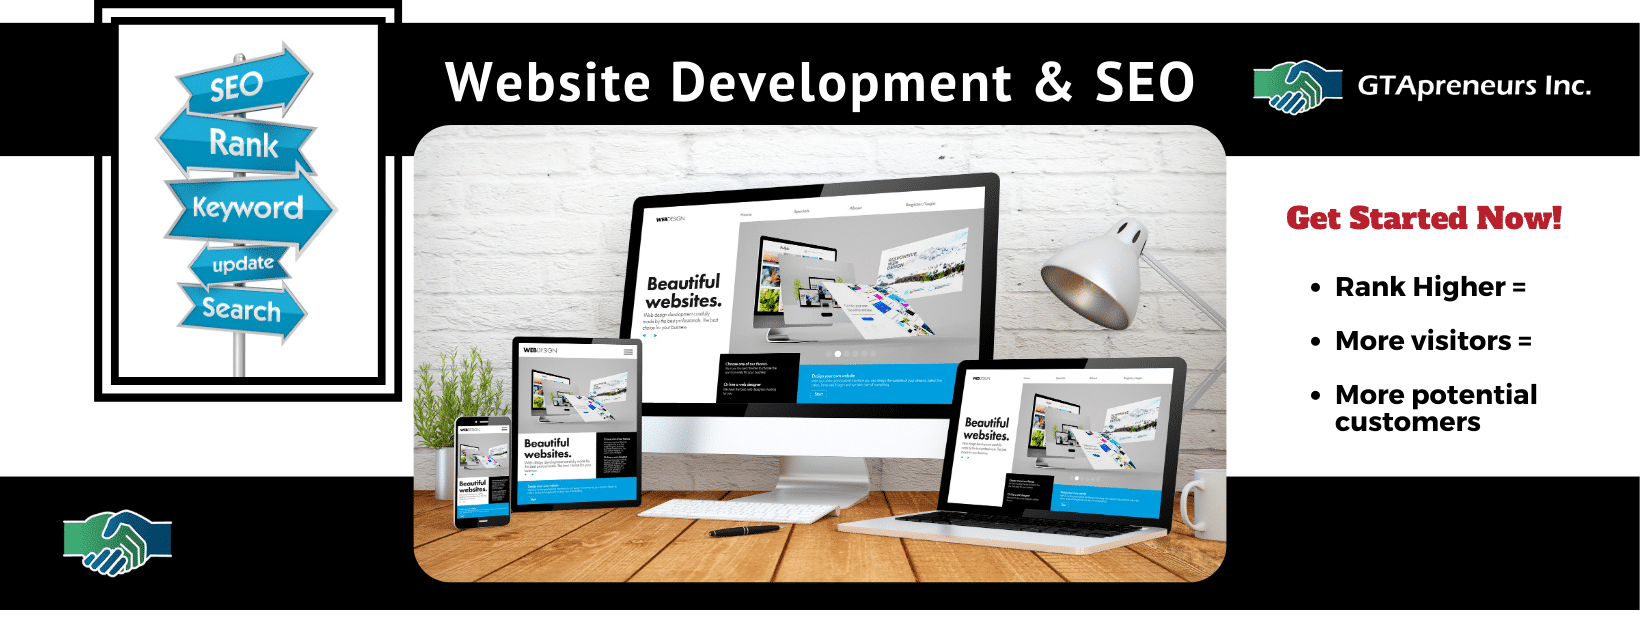 GTApreneurs website development and SEO services banner